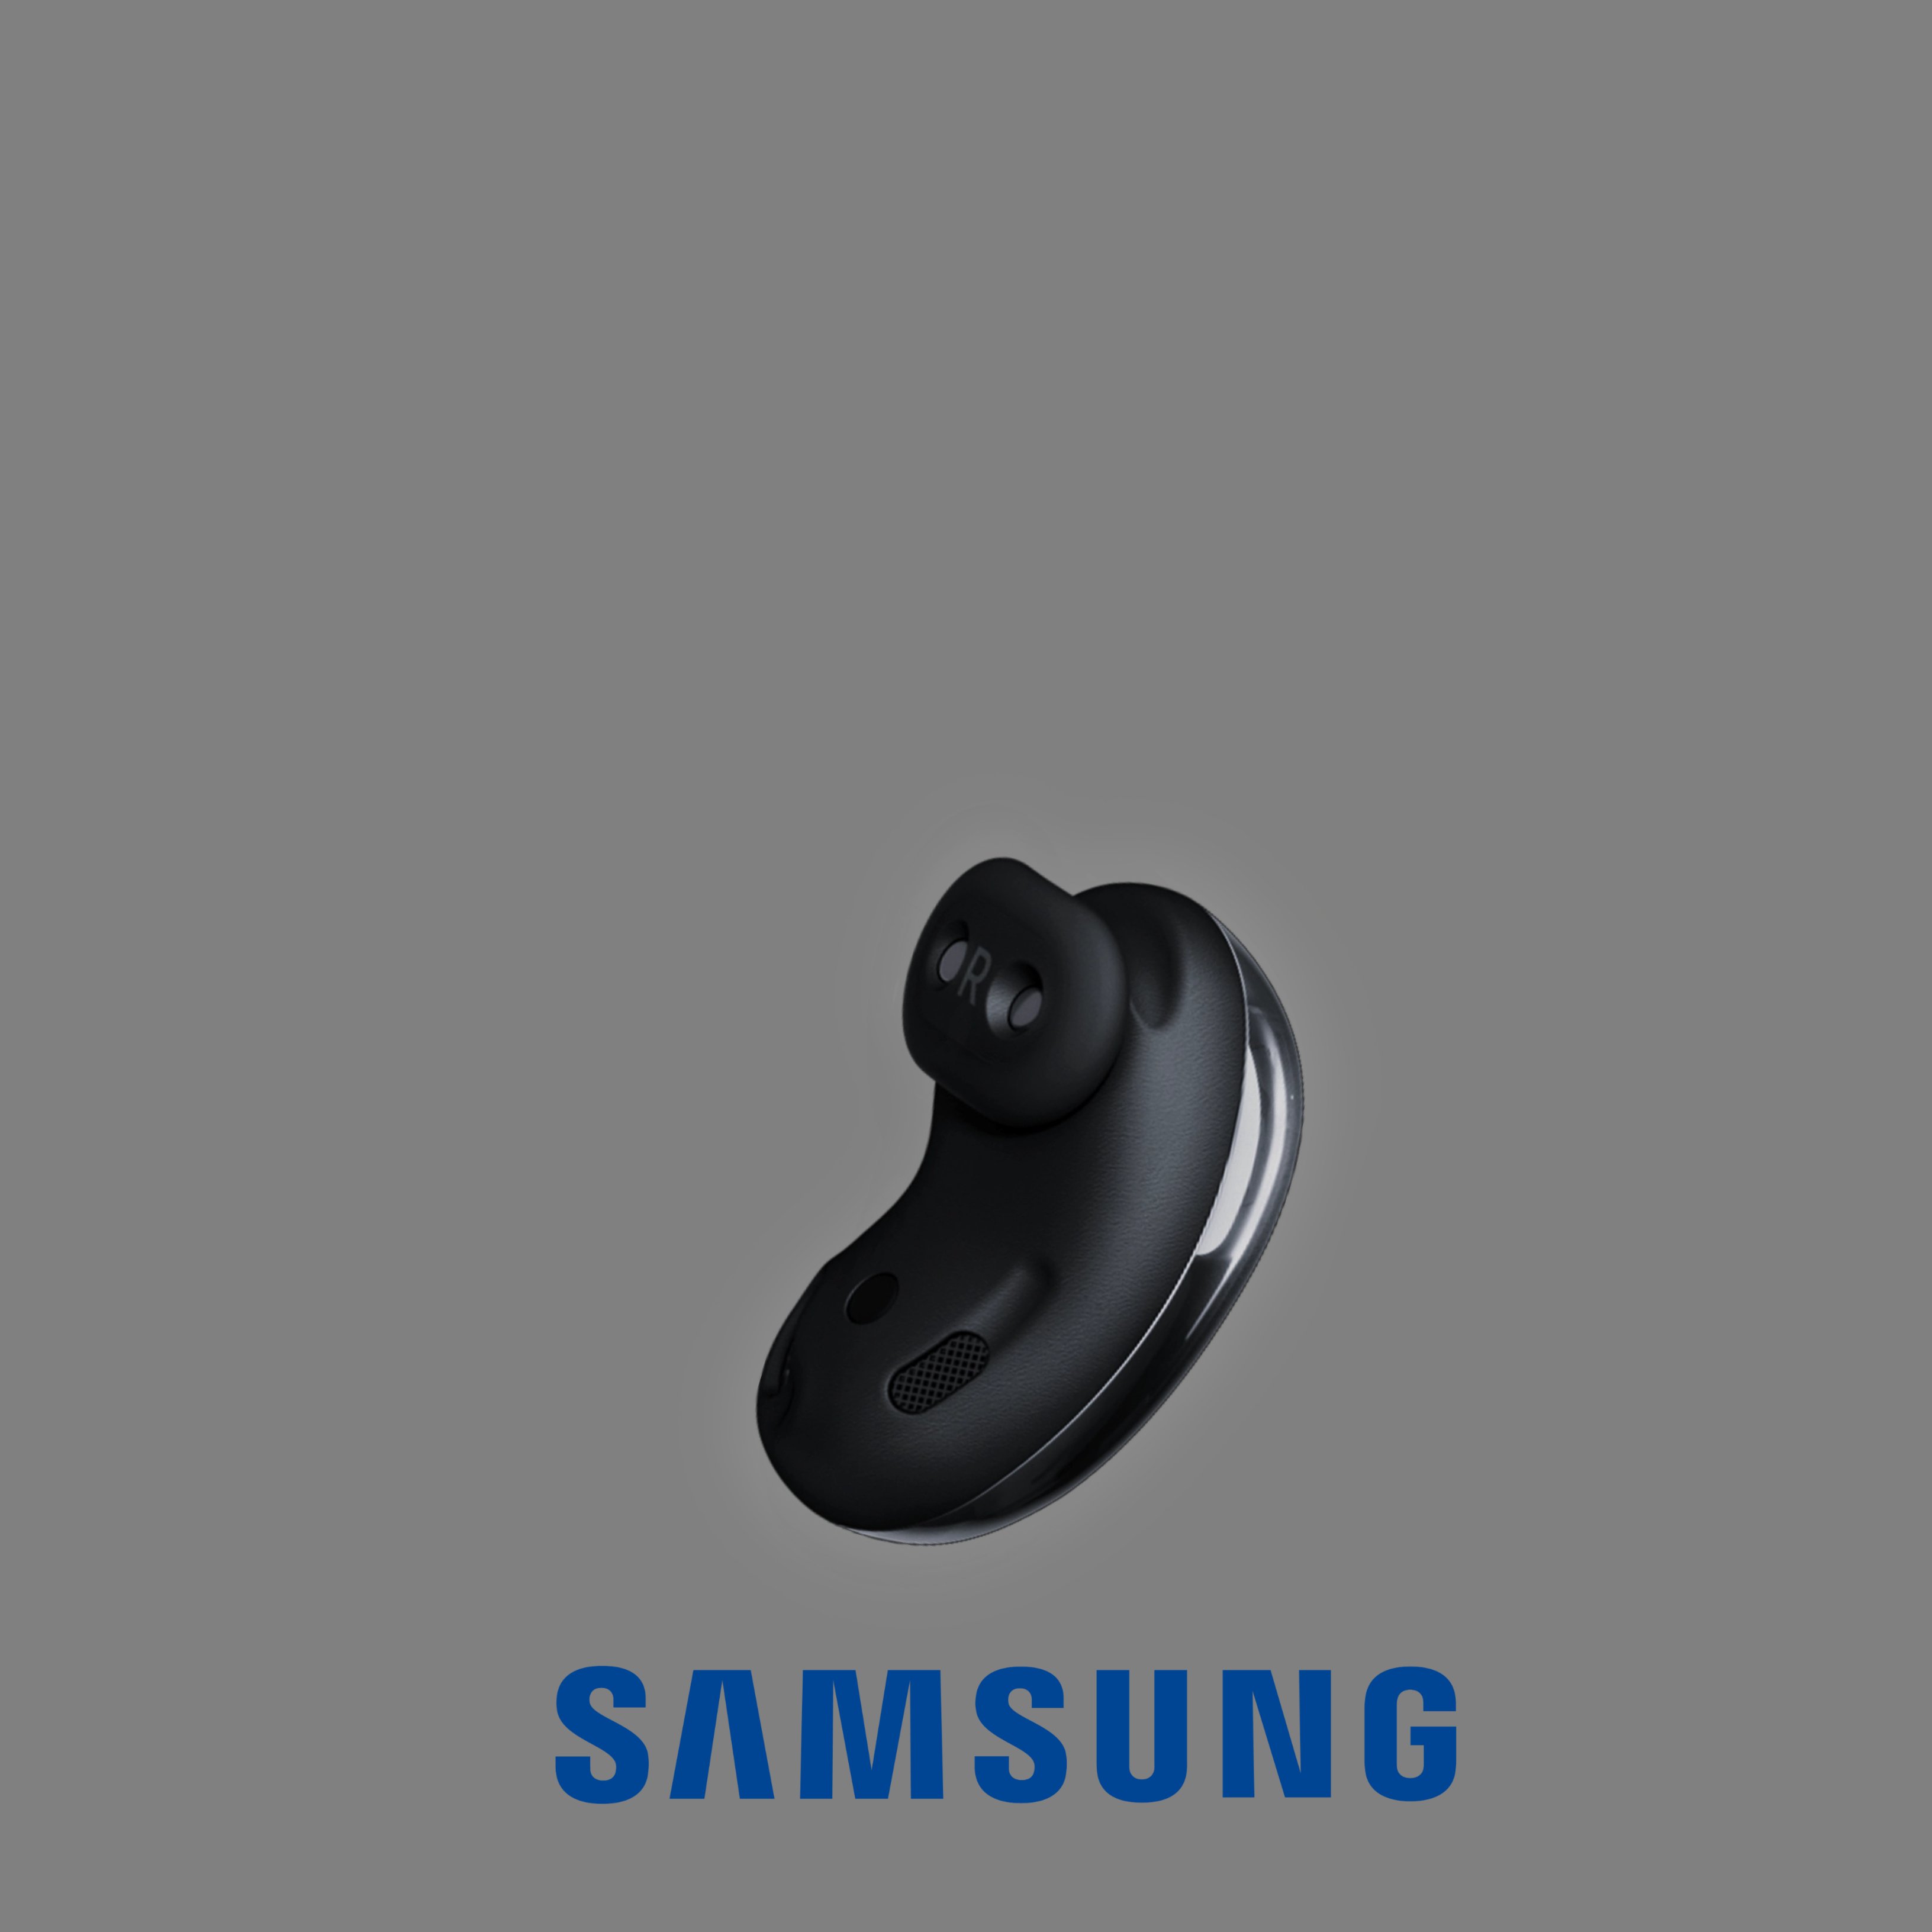 Presentats els nous auriculars Samsung Galaxy Buds Live